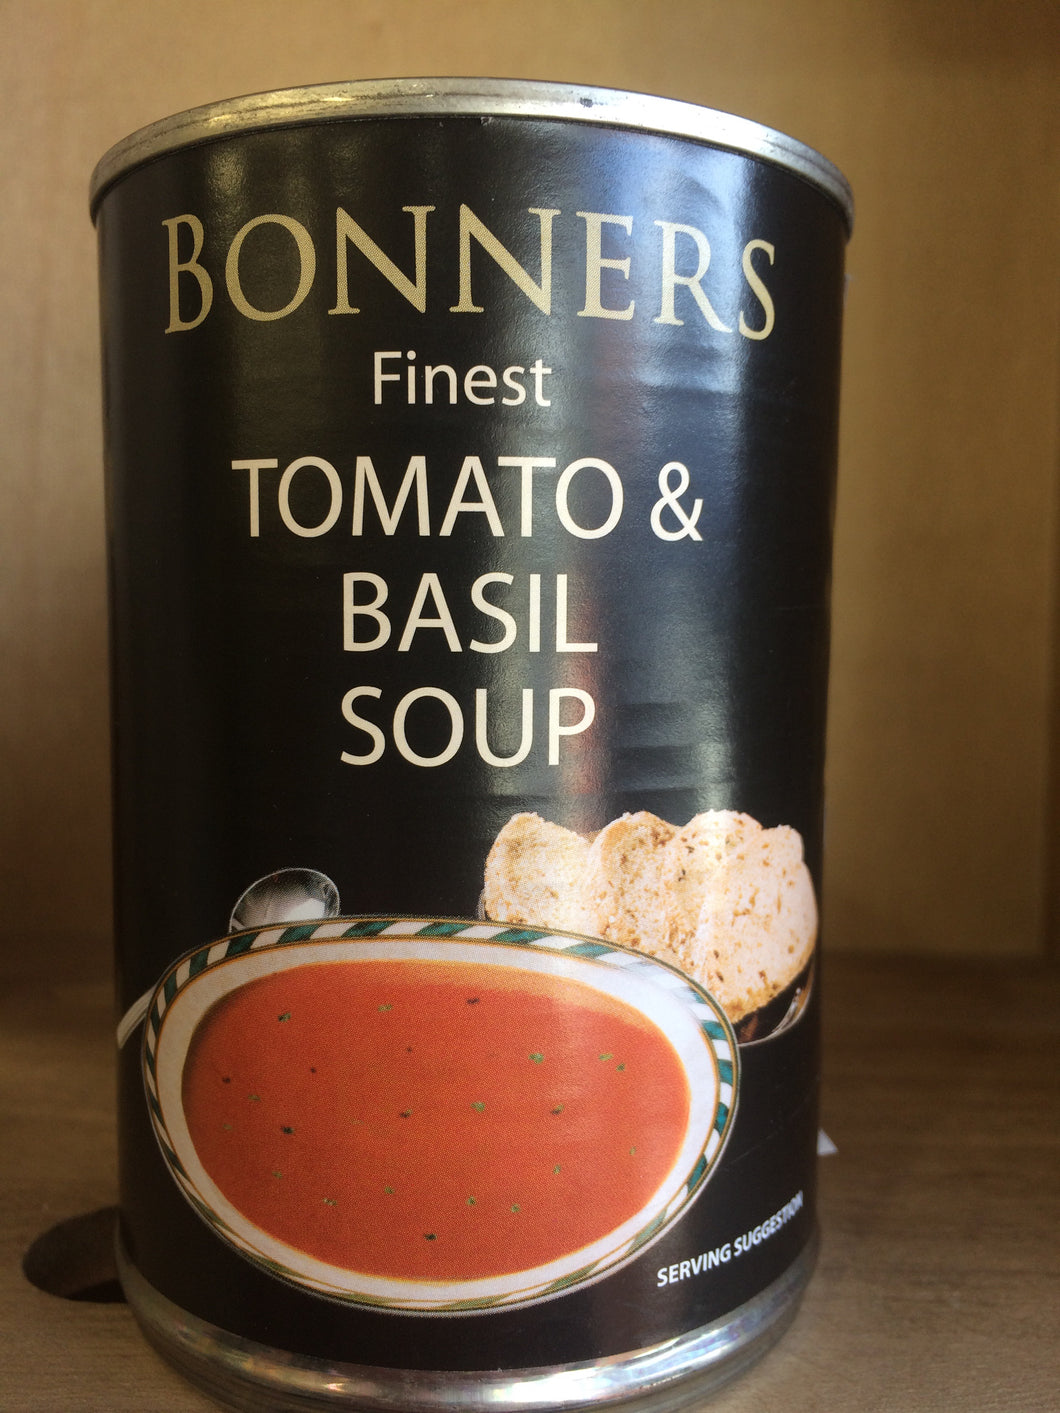 Bonners Finest Tomato & Basil Soup 400g